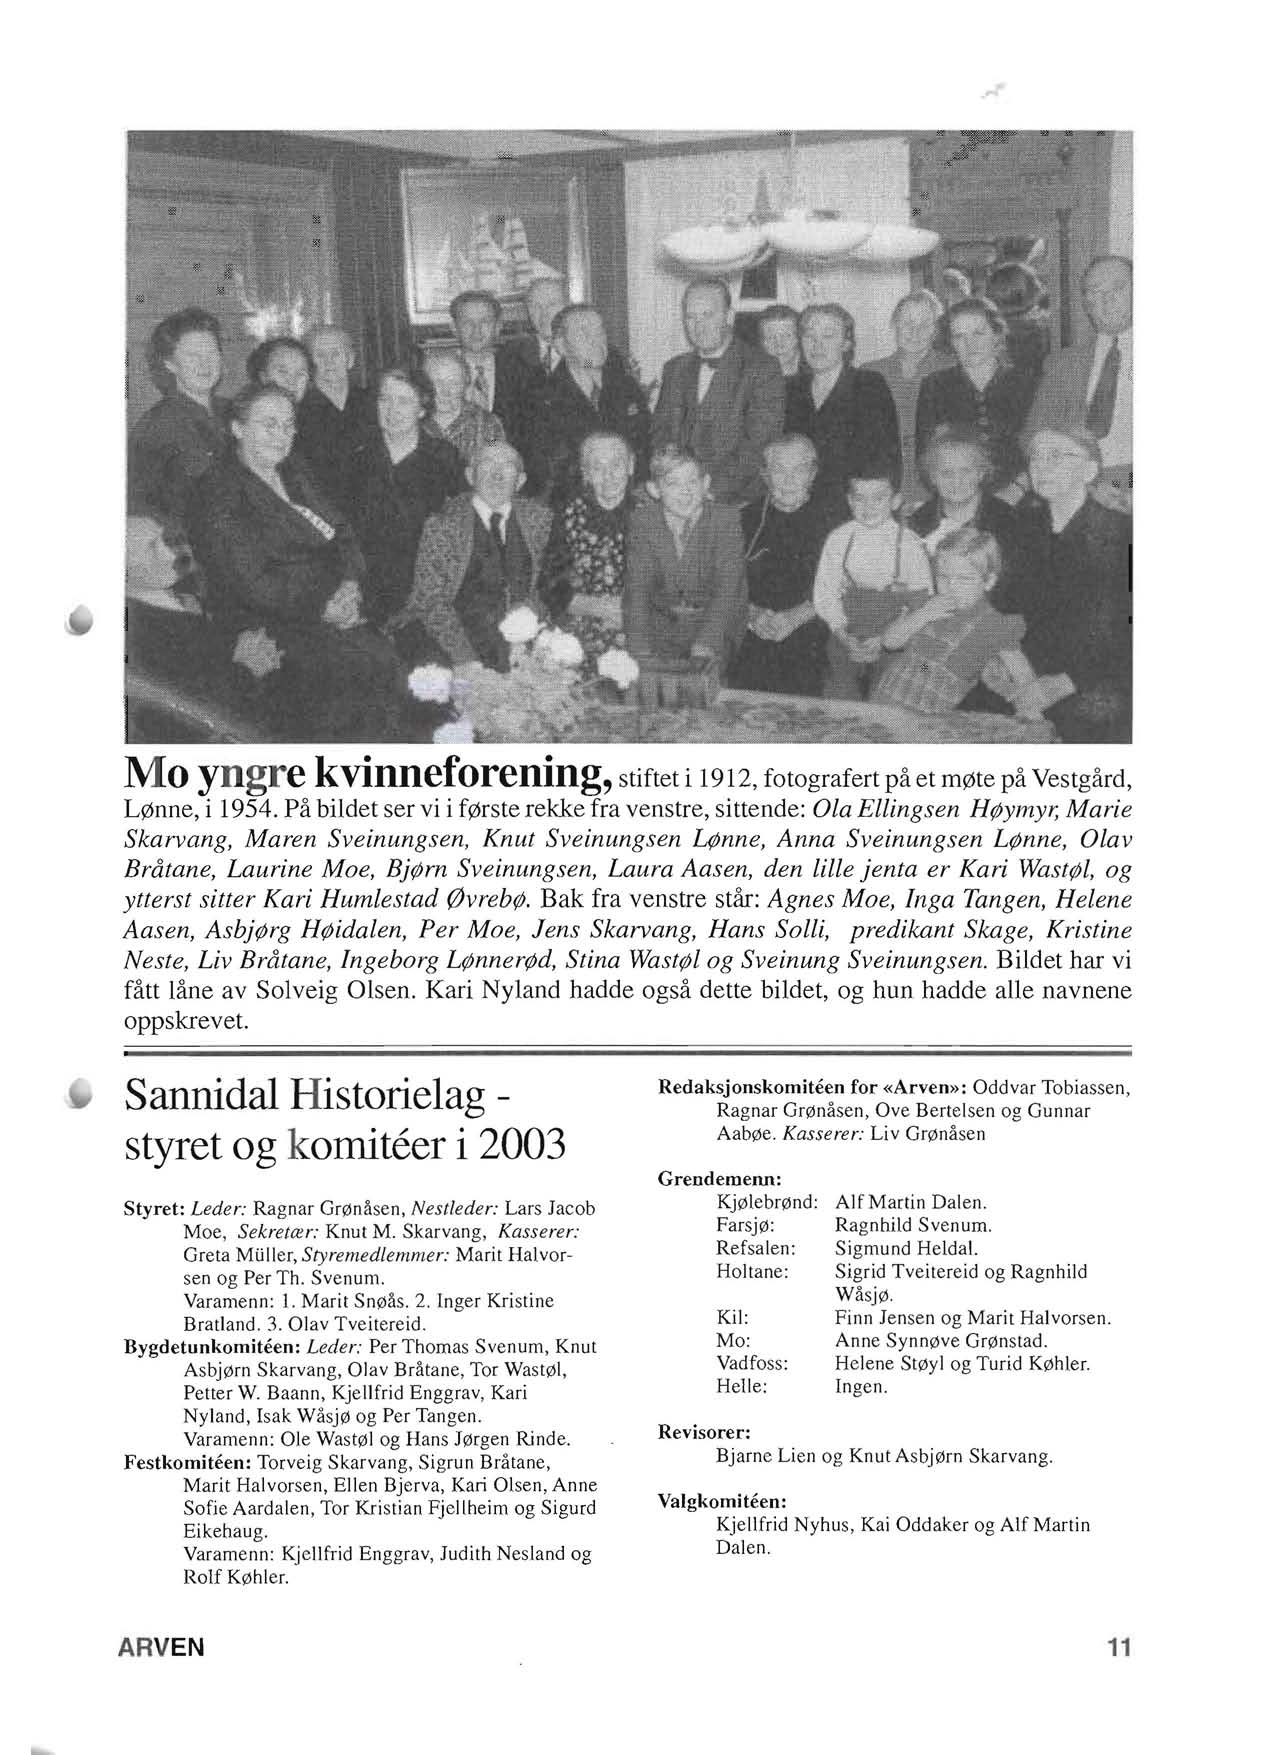 Mo yngre kvinneforening, stiftet i 1912, fotografert pa et mote pa Vestgard, L nne, i 1954.